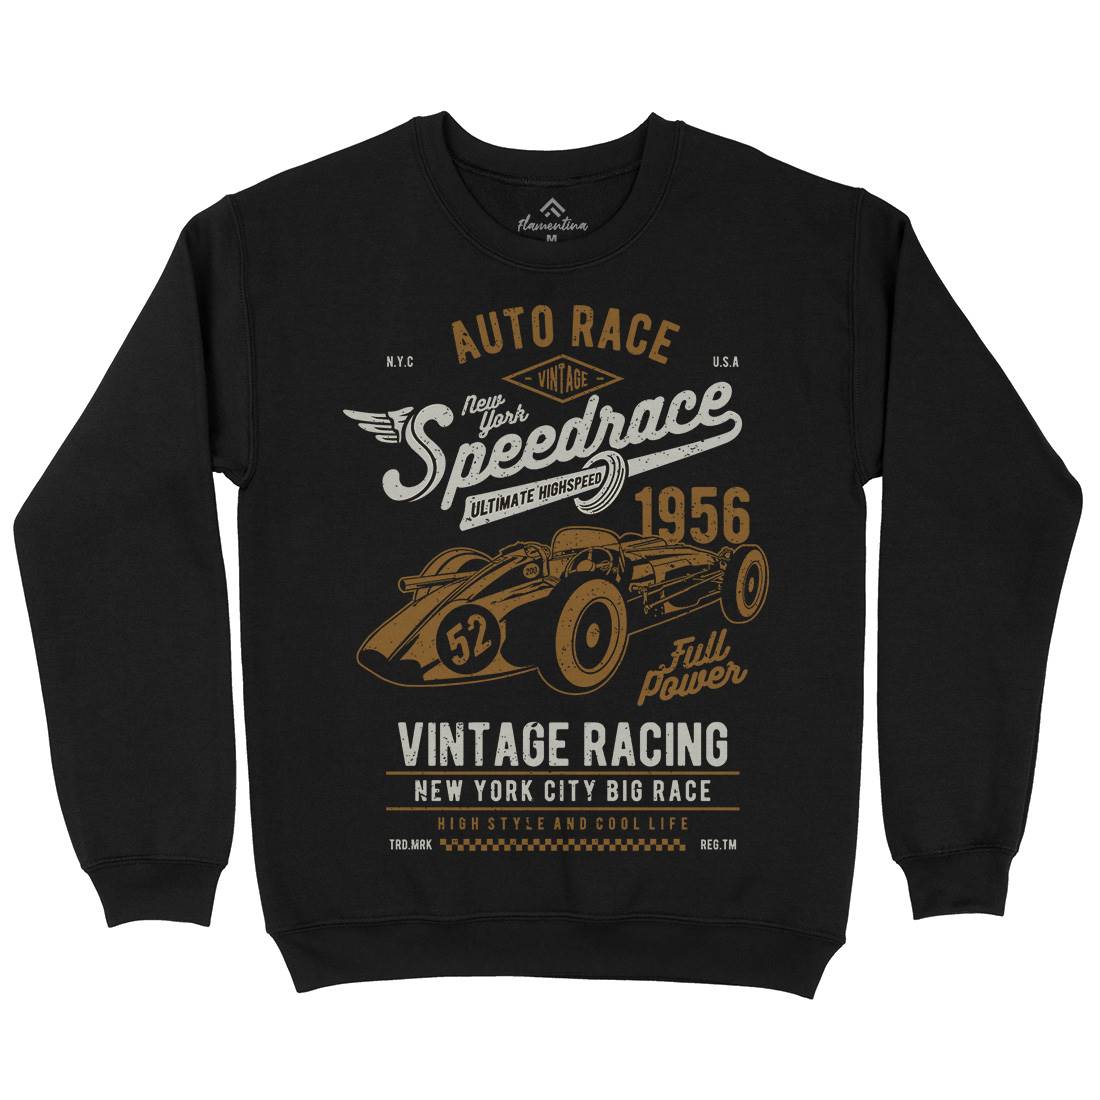 Vintage Speedrace Kids Crew Neck Sweatshirt Cars A788